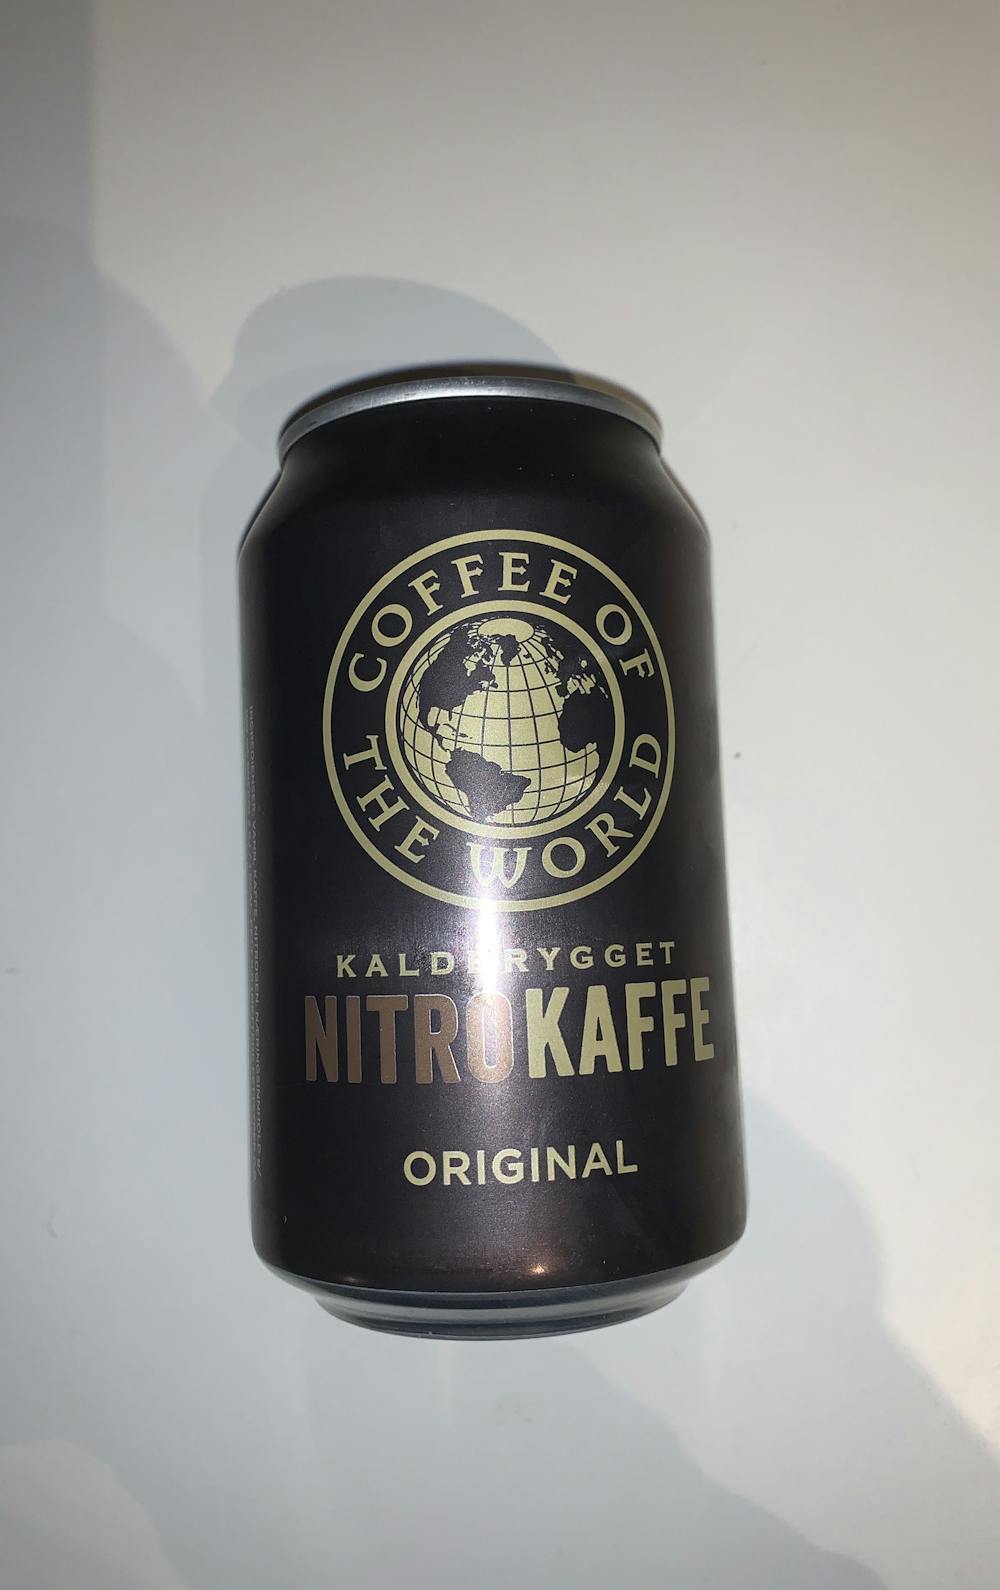 Nitrokaffe original, Coffee of the world